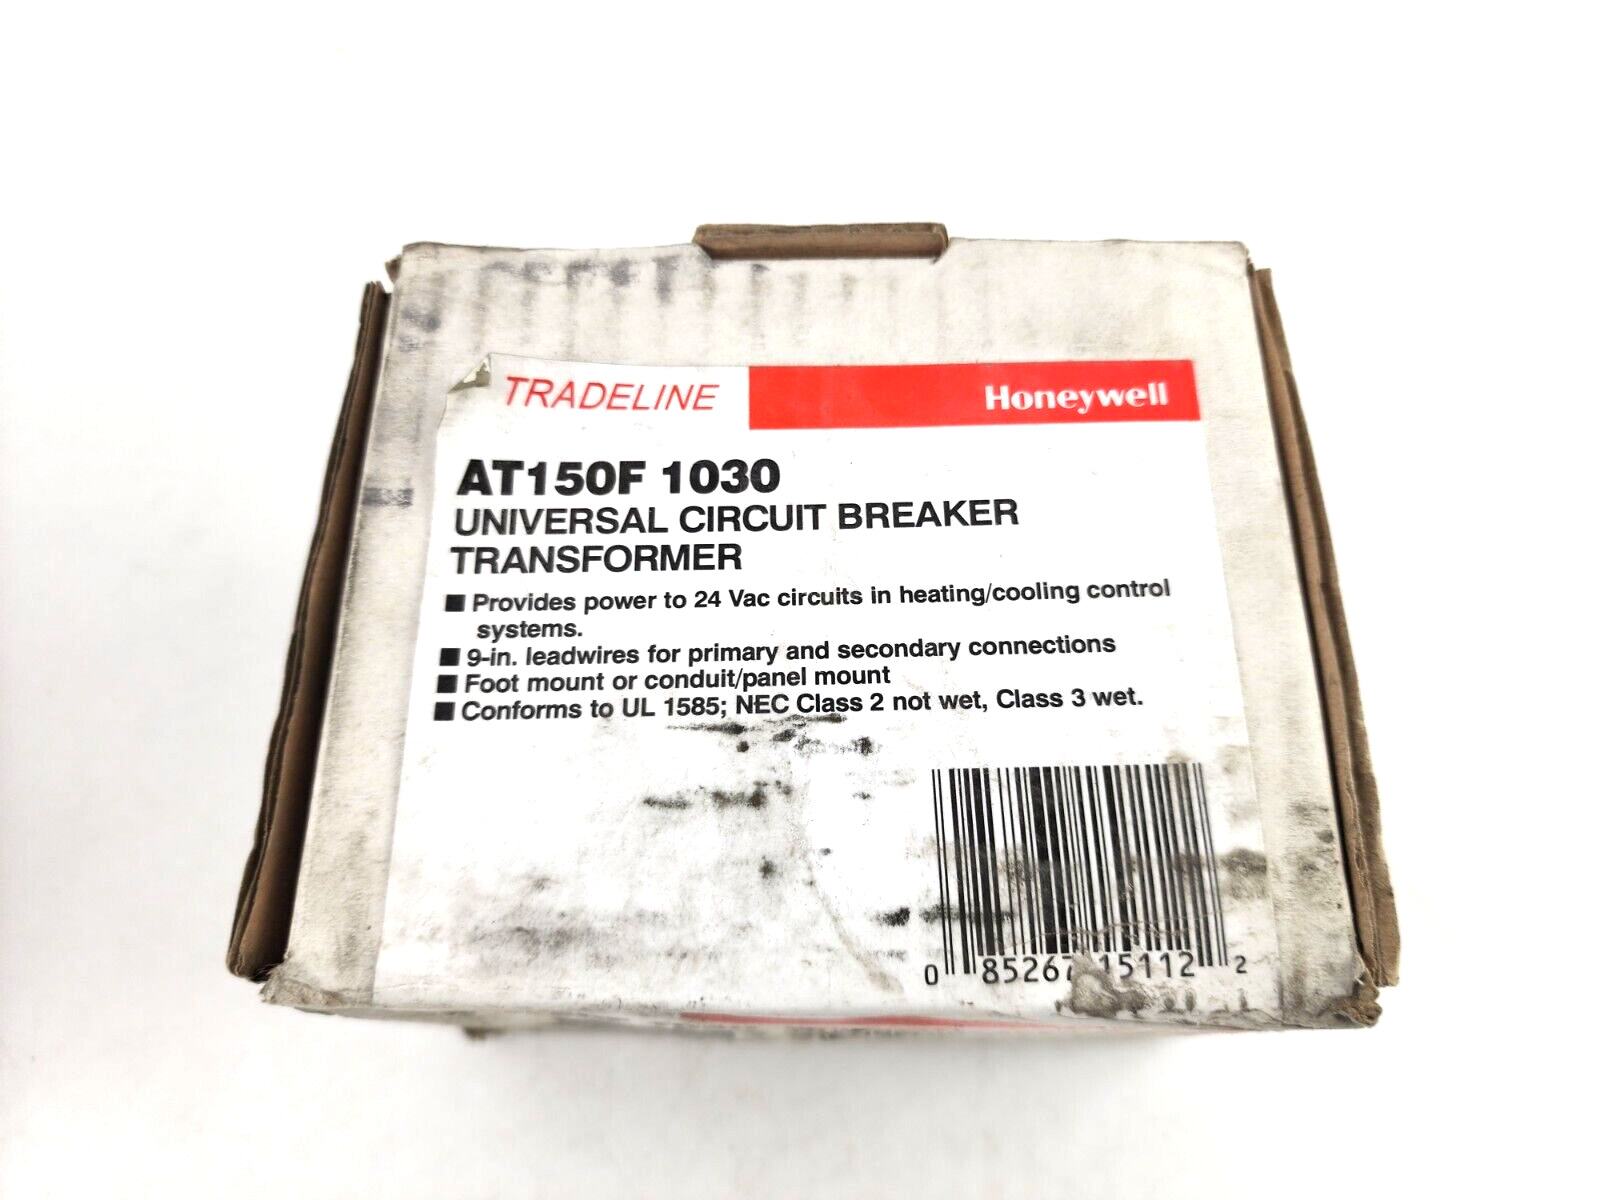 Honeywell Tradeline AT150F1030 Universal Circuit Breaker Transformer